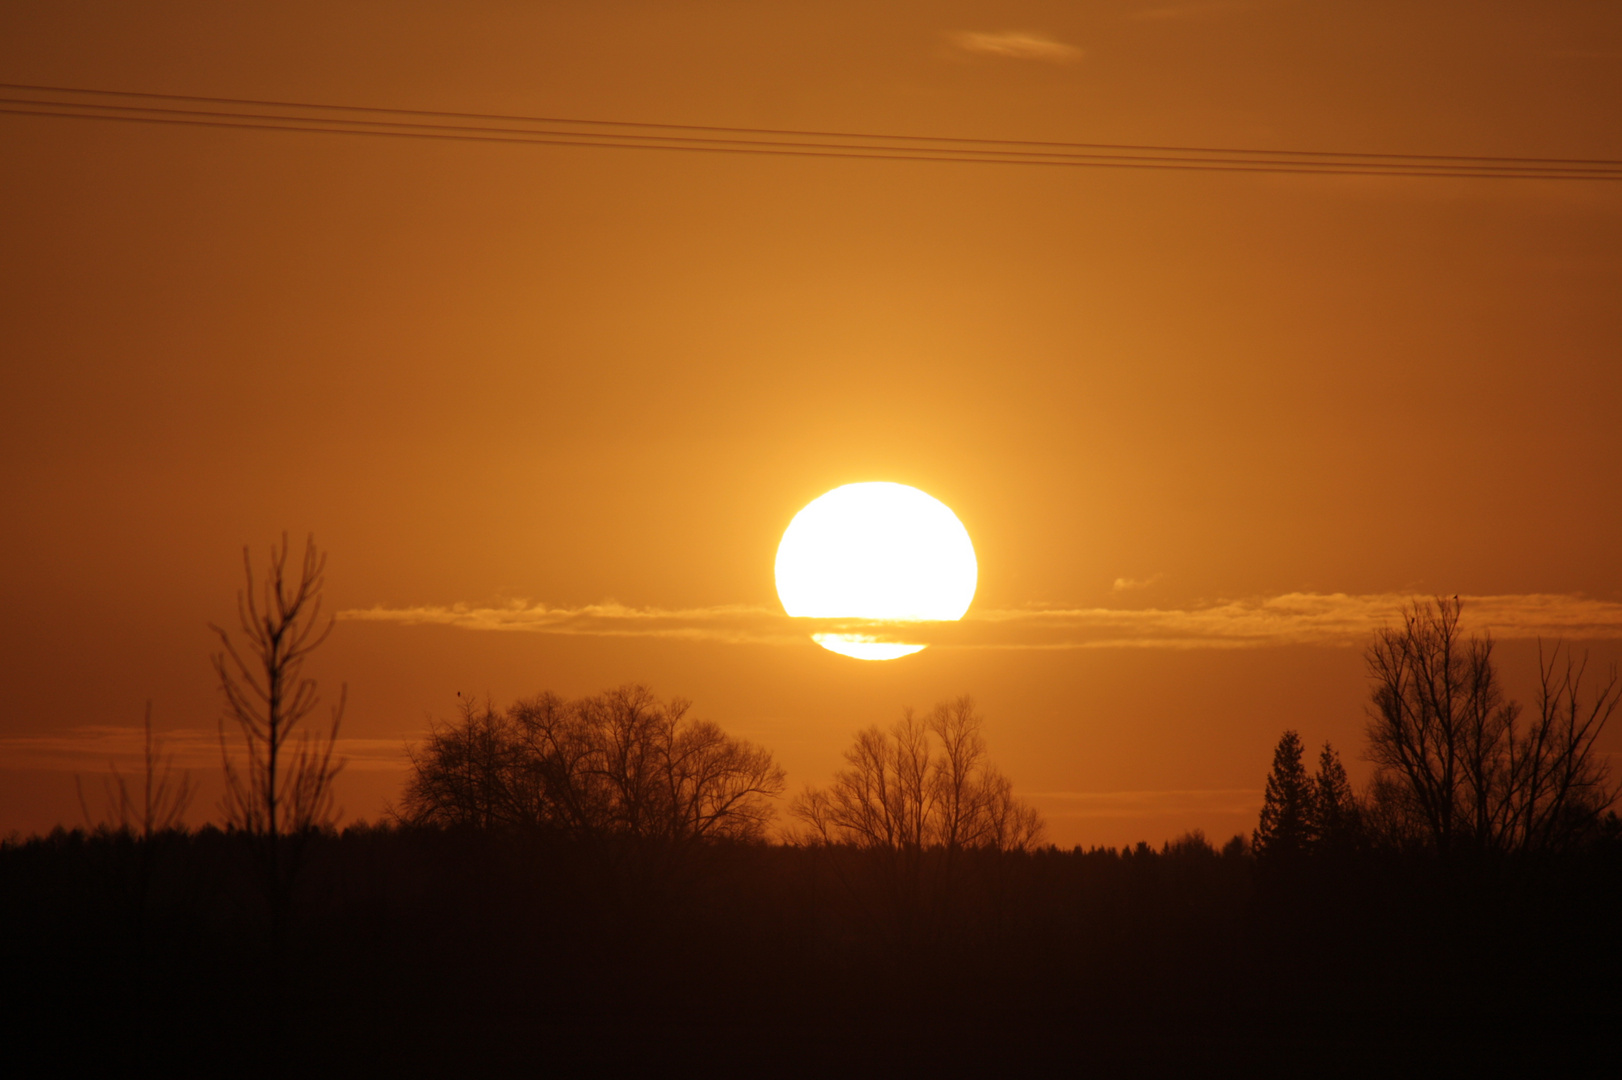 Sonnenaufgang am 03.03.15 in Mammendorf